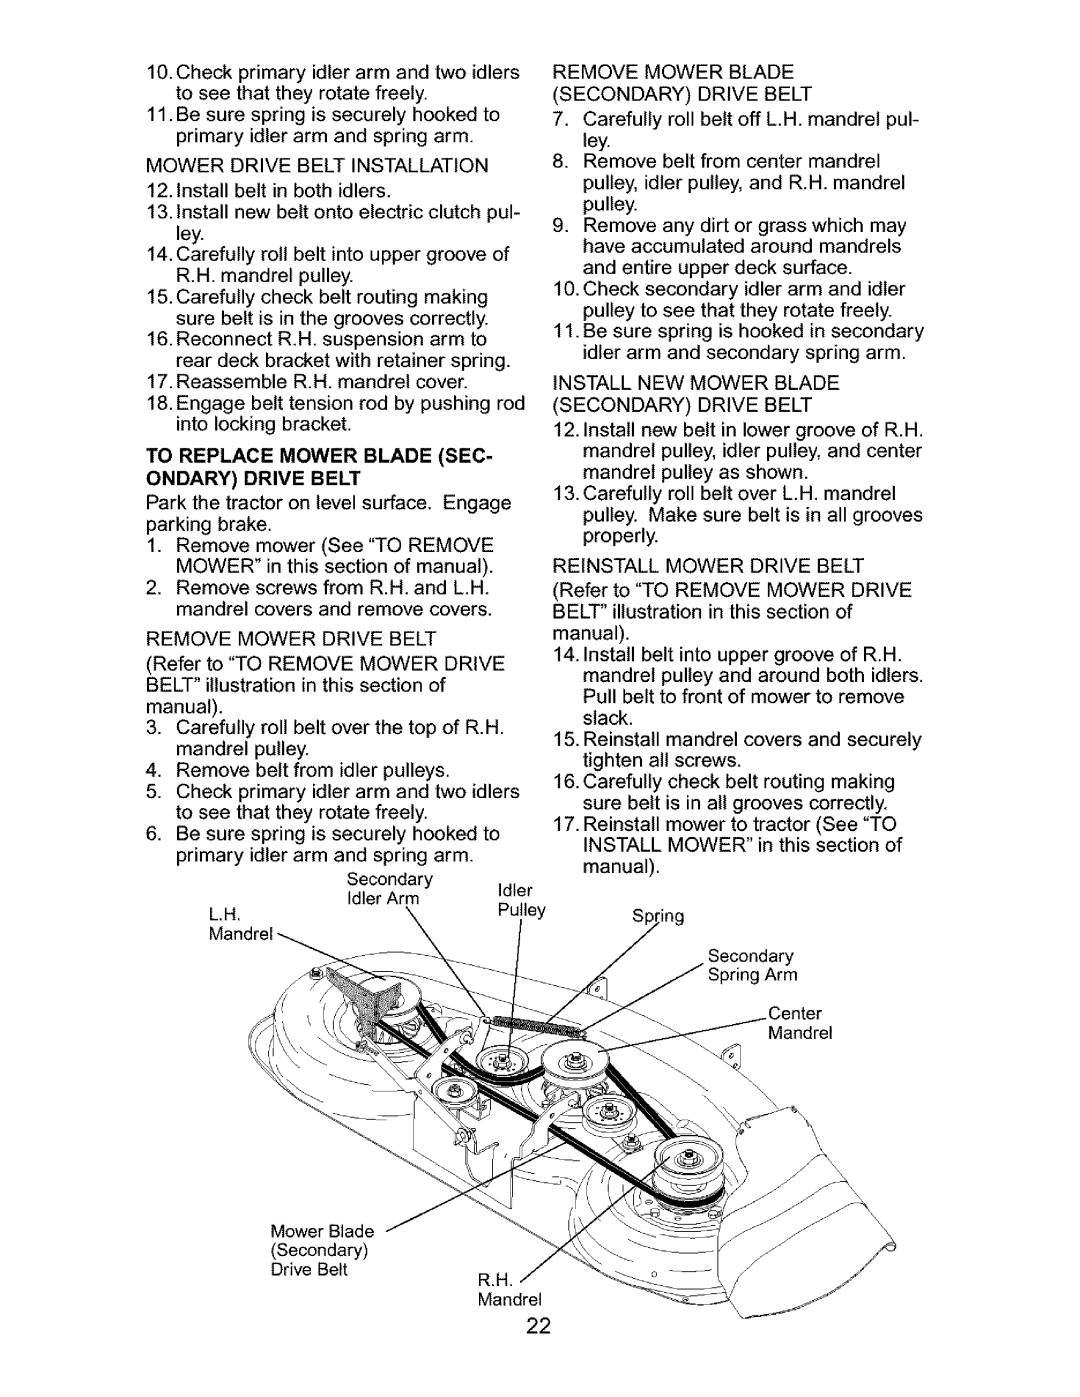 Craftsman 917.27631 owner manual To Replace Mower Blade Sec Ondary Drive Belt, parking brake 